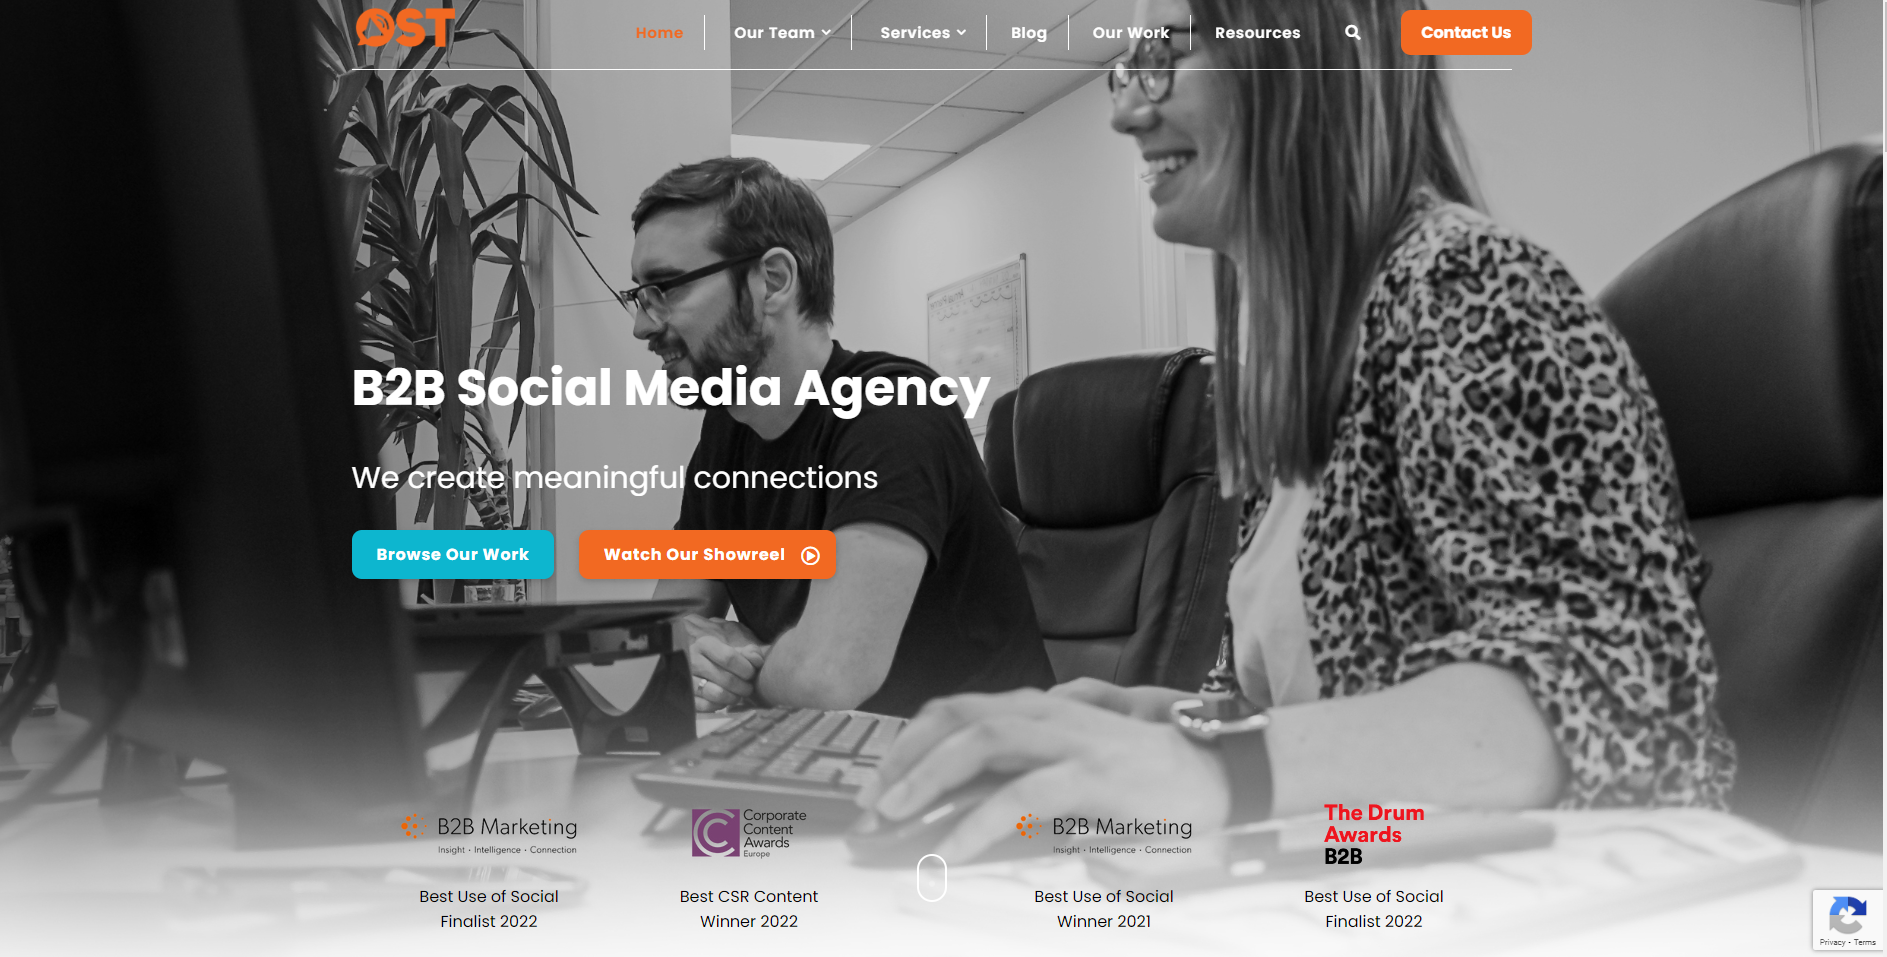 OST Social Media Agency Homepage